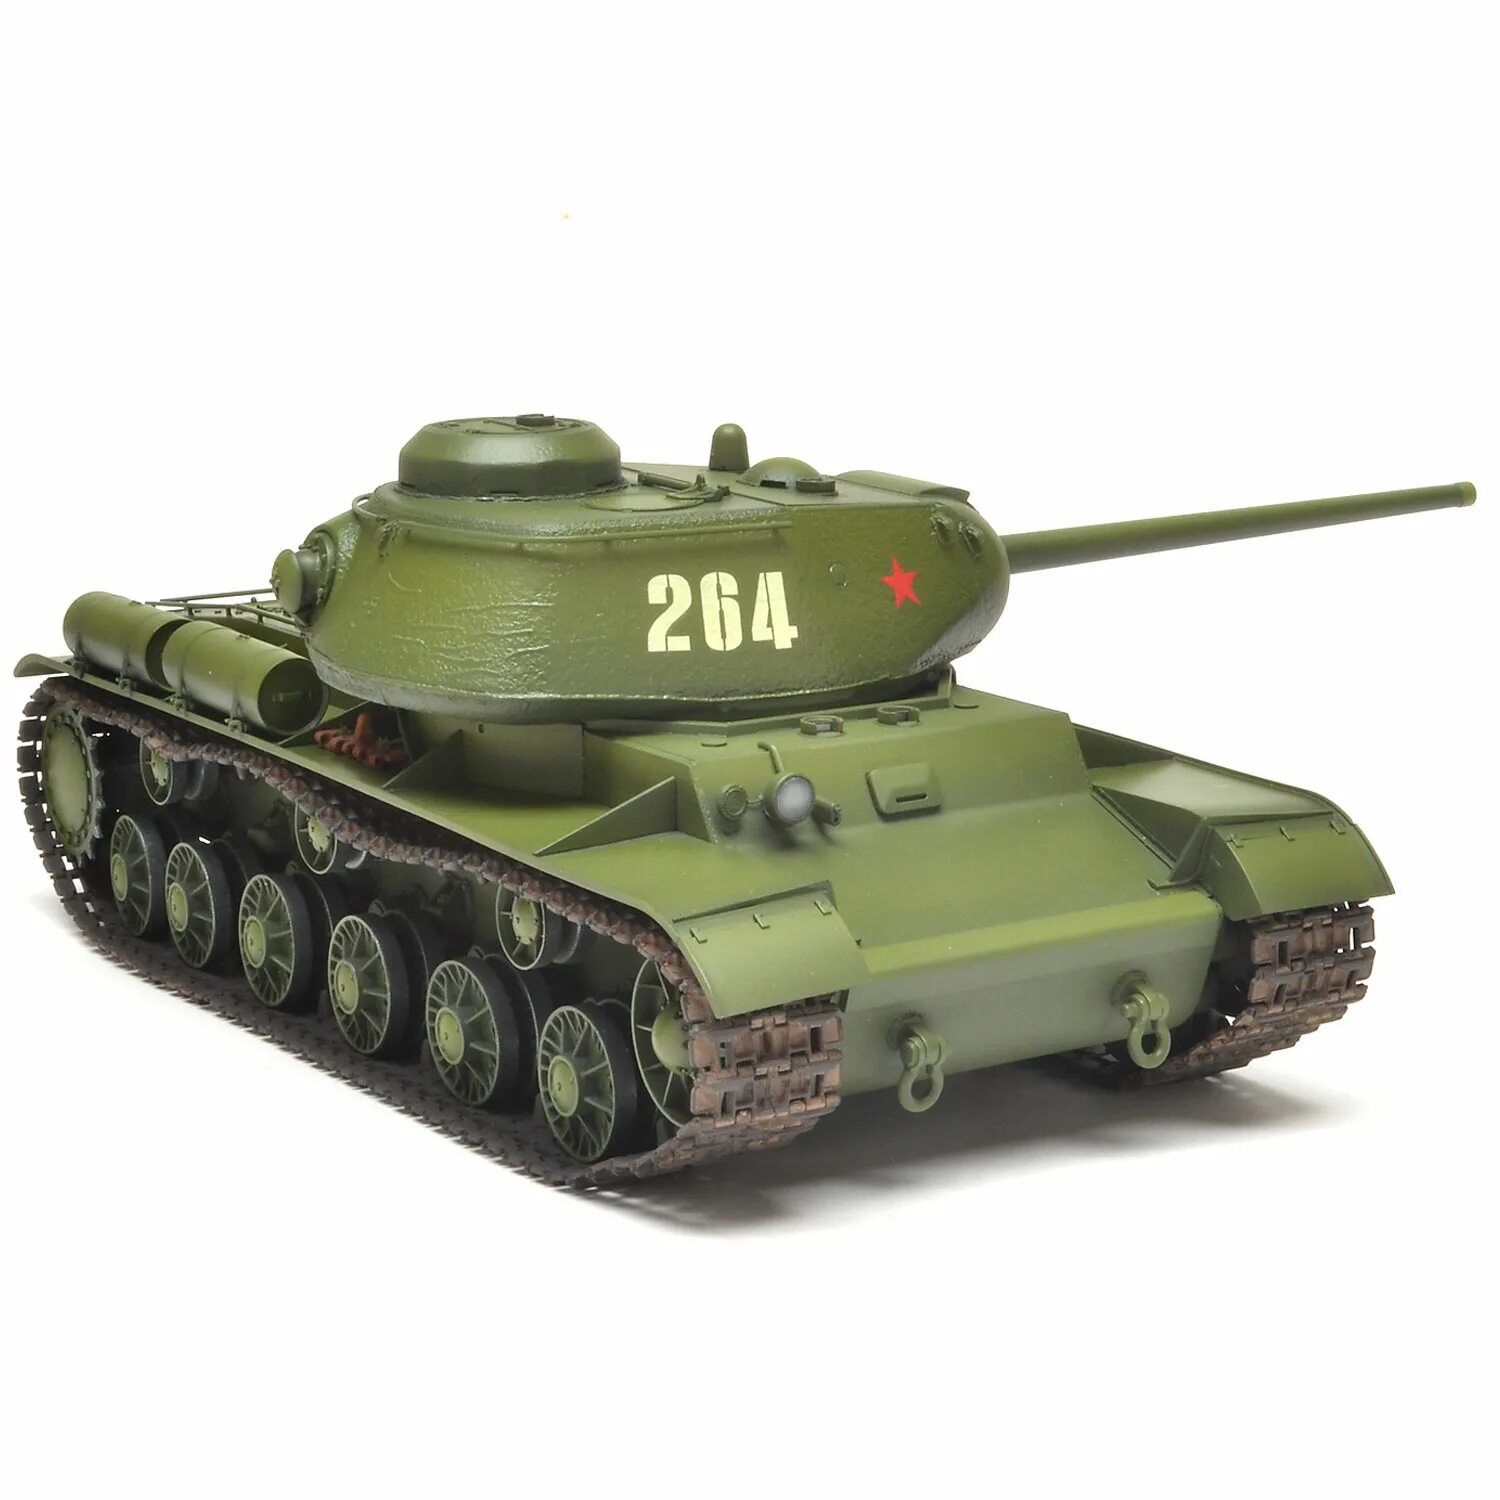 KV 44 танк. Russian Heavy Tank KV-85. Кв-45 танк. Кв 44 танк игрушка